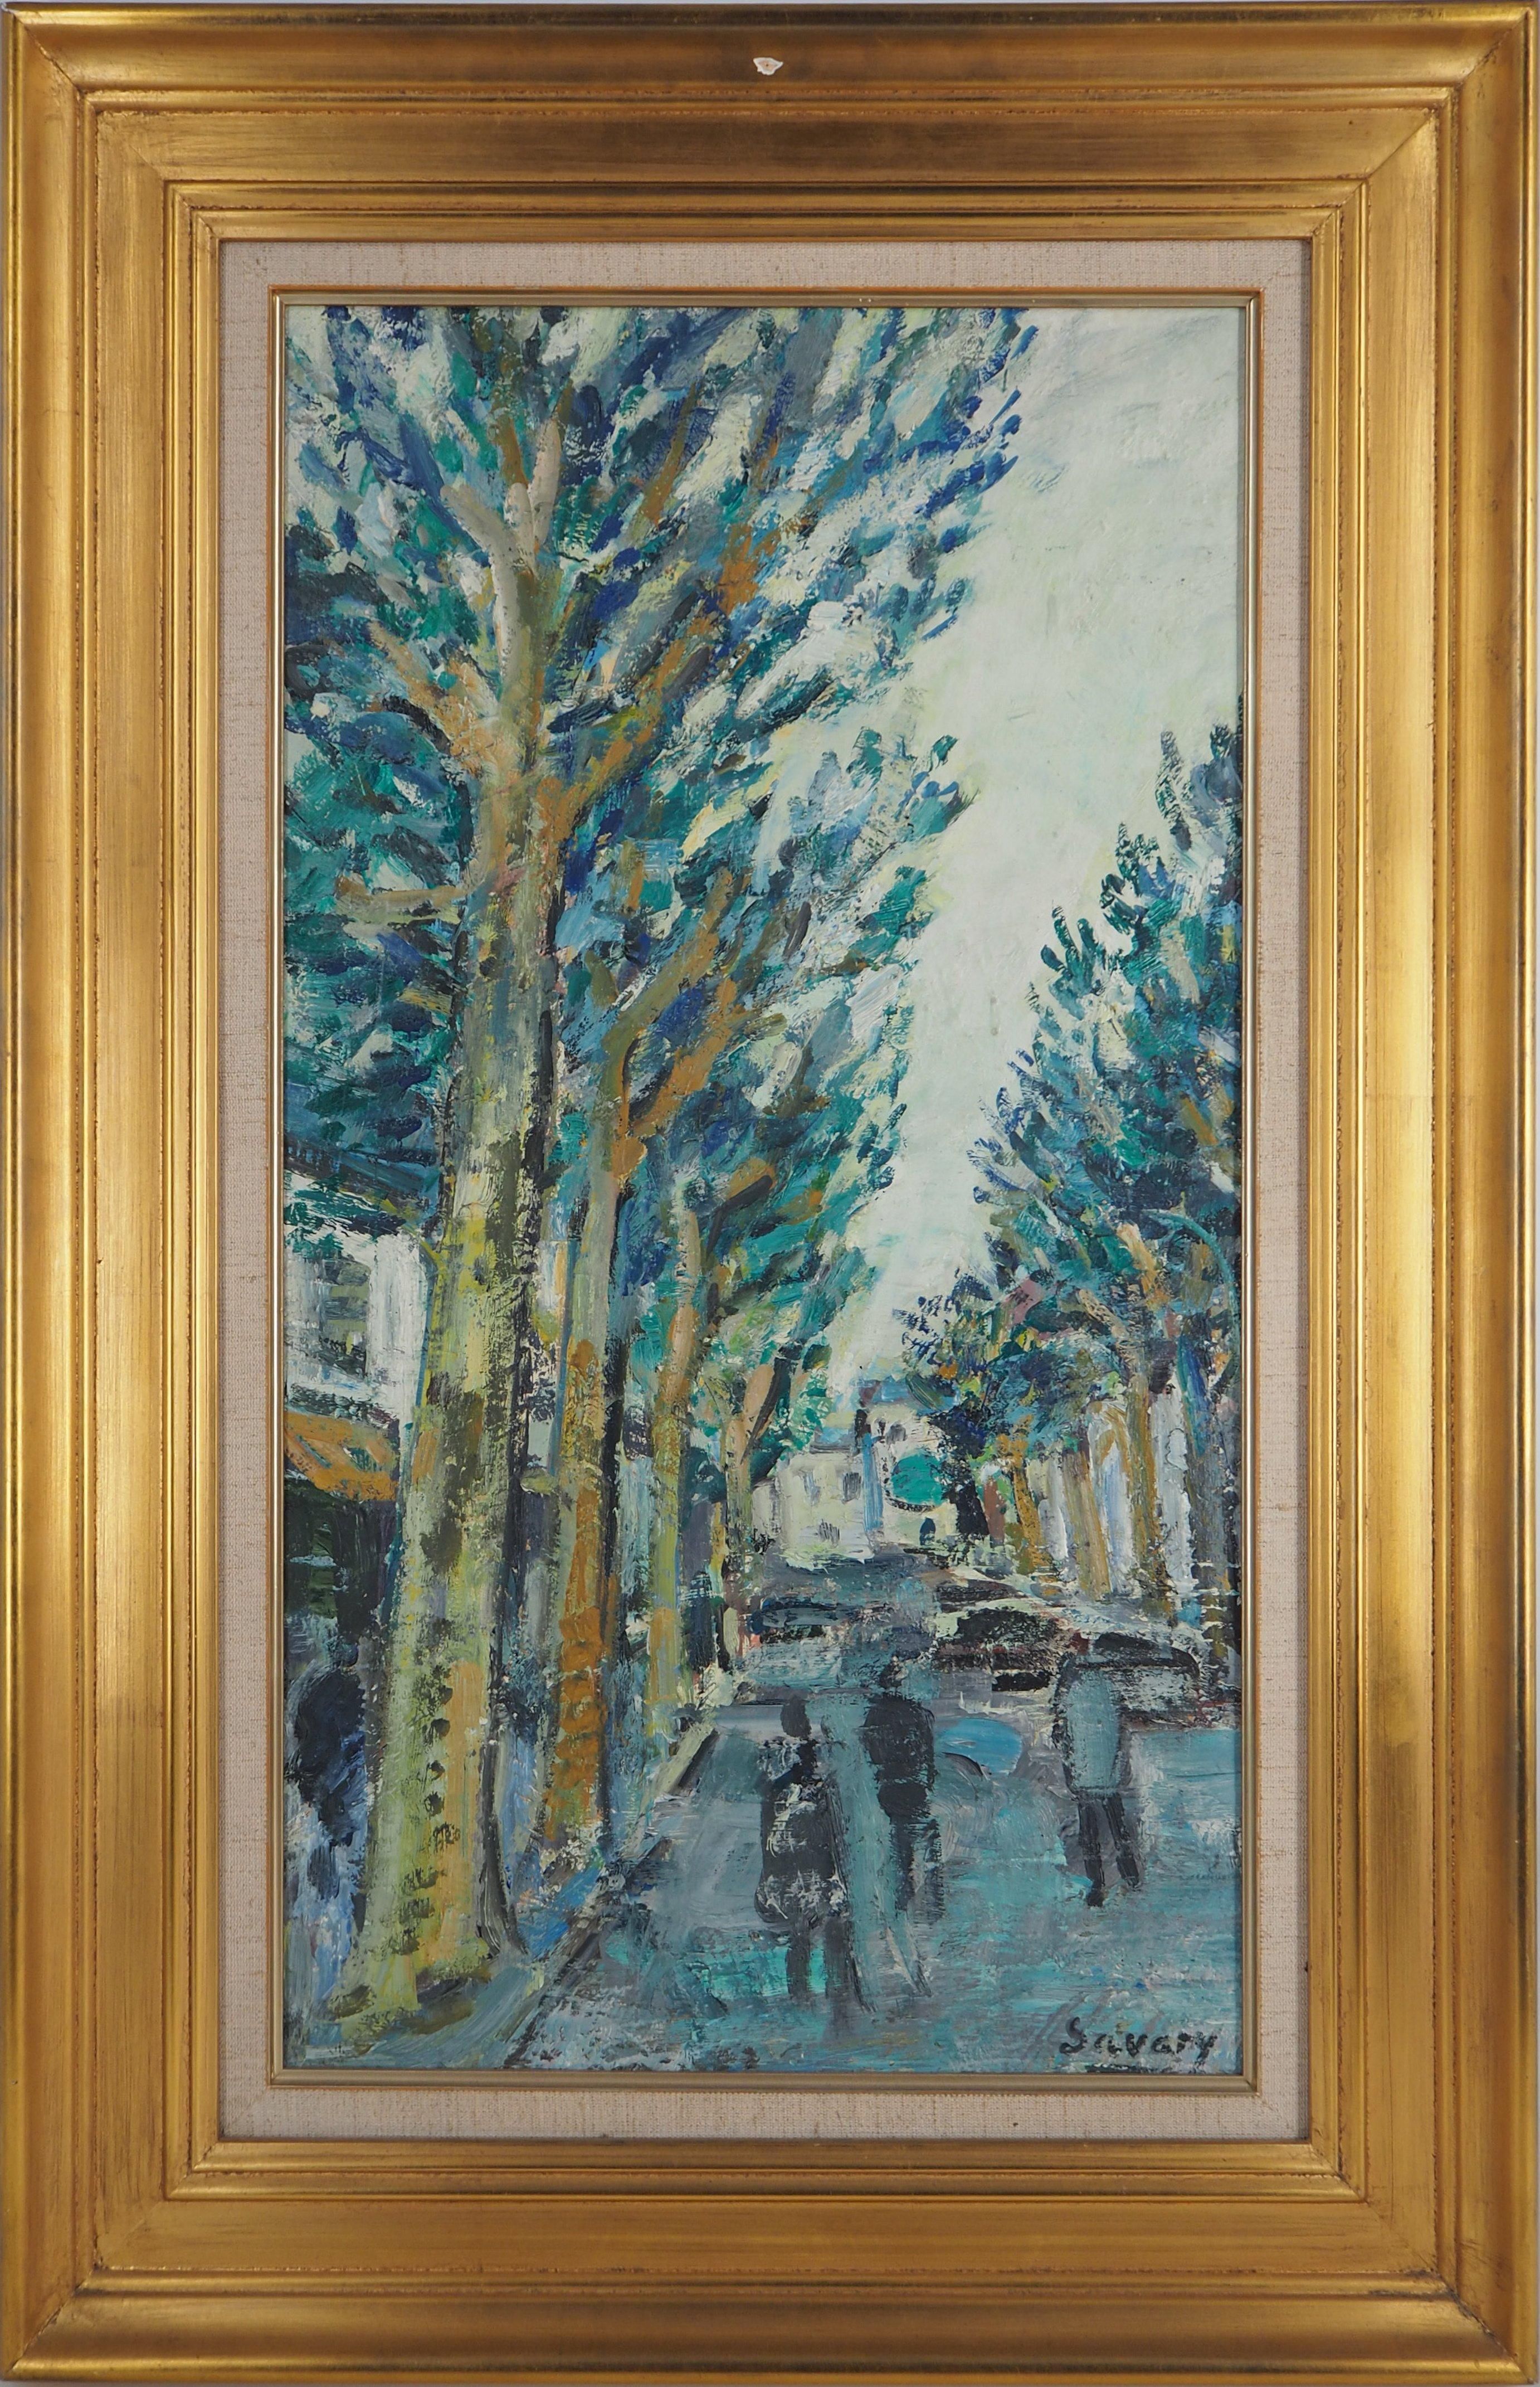 Robert Savary Figurative Painting - Spring, Tree-Lined Avenue - Original oil painting, signed